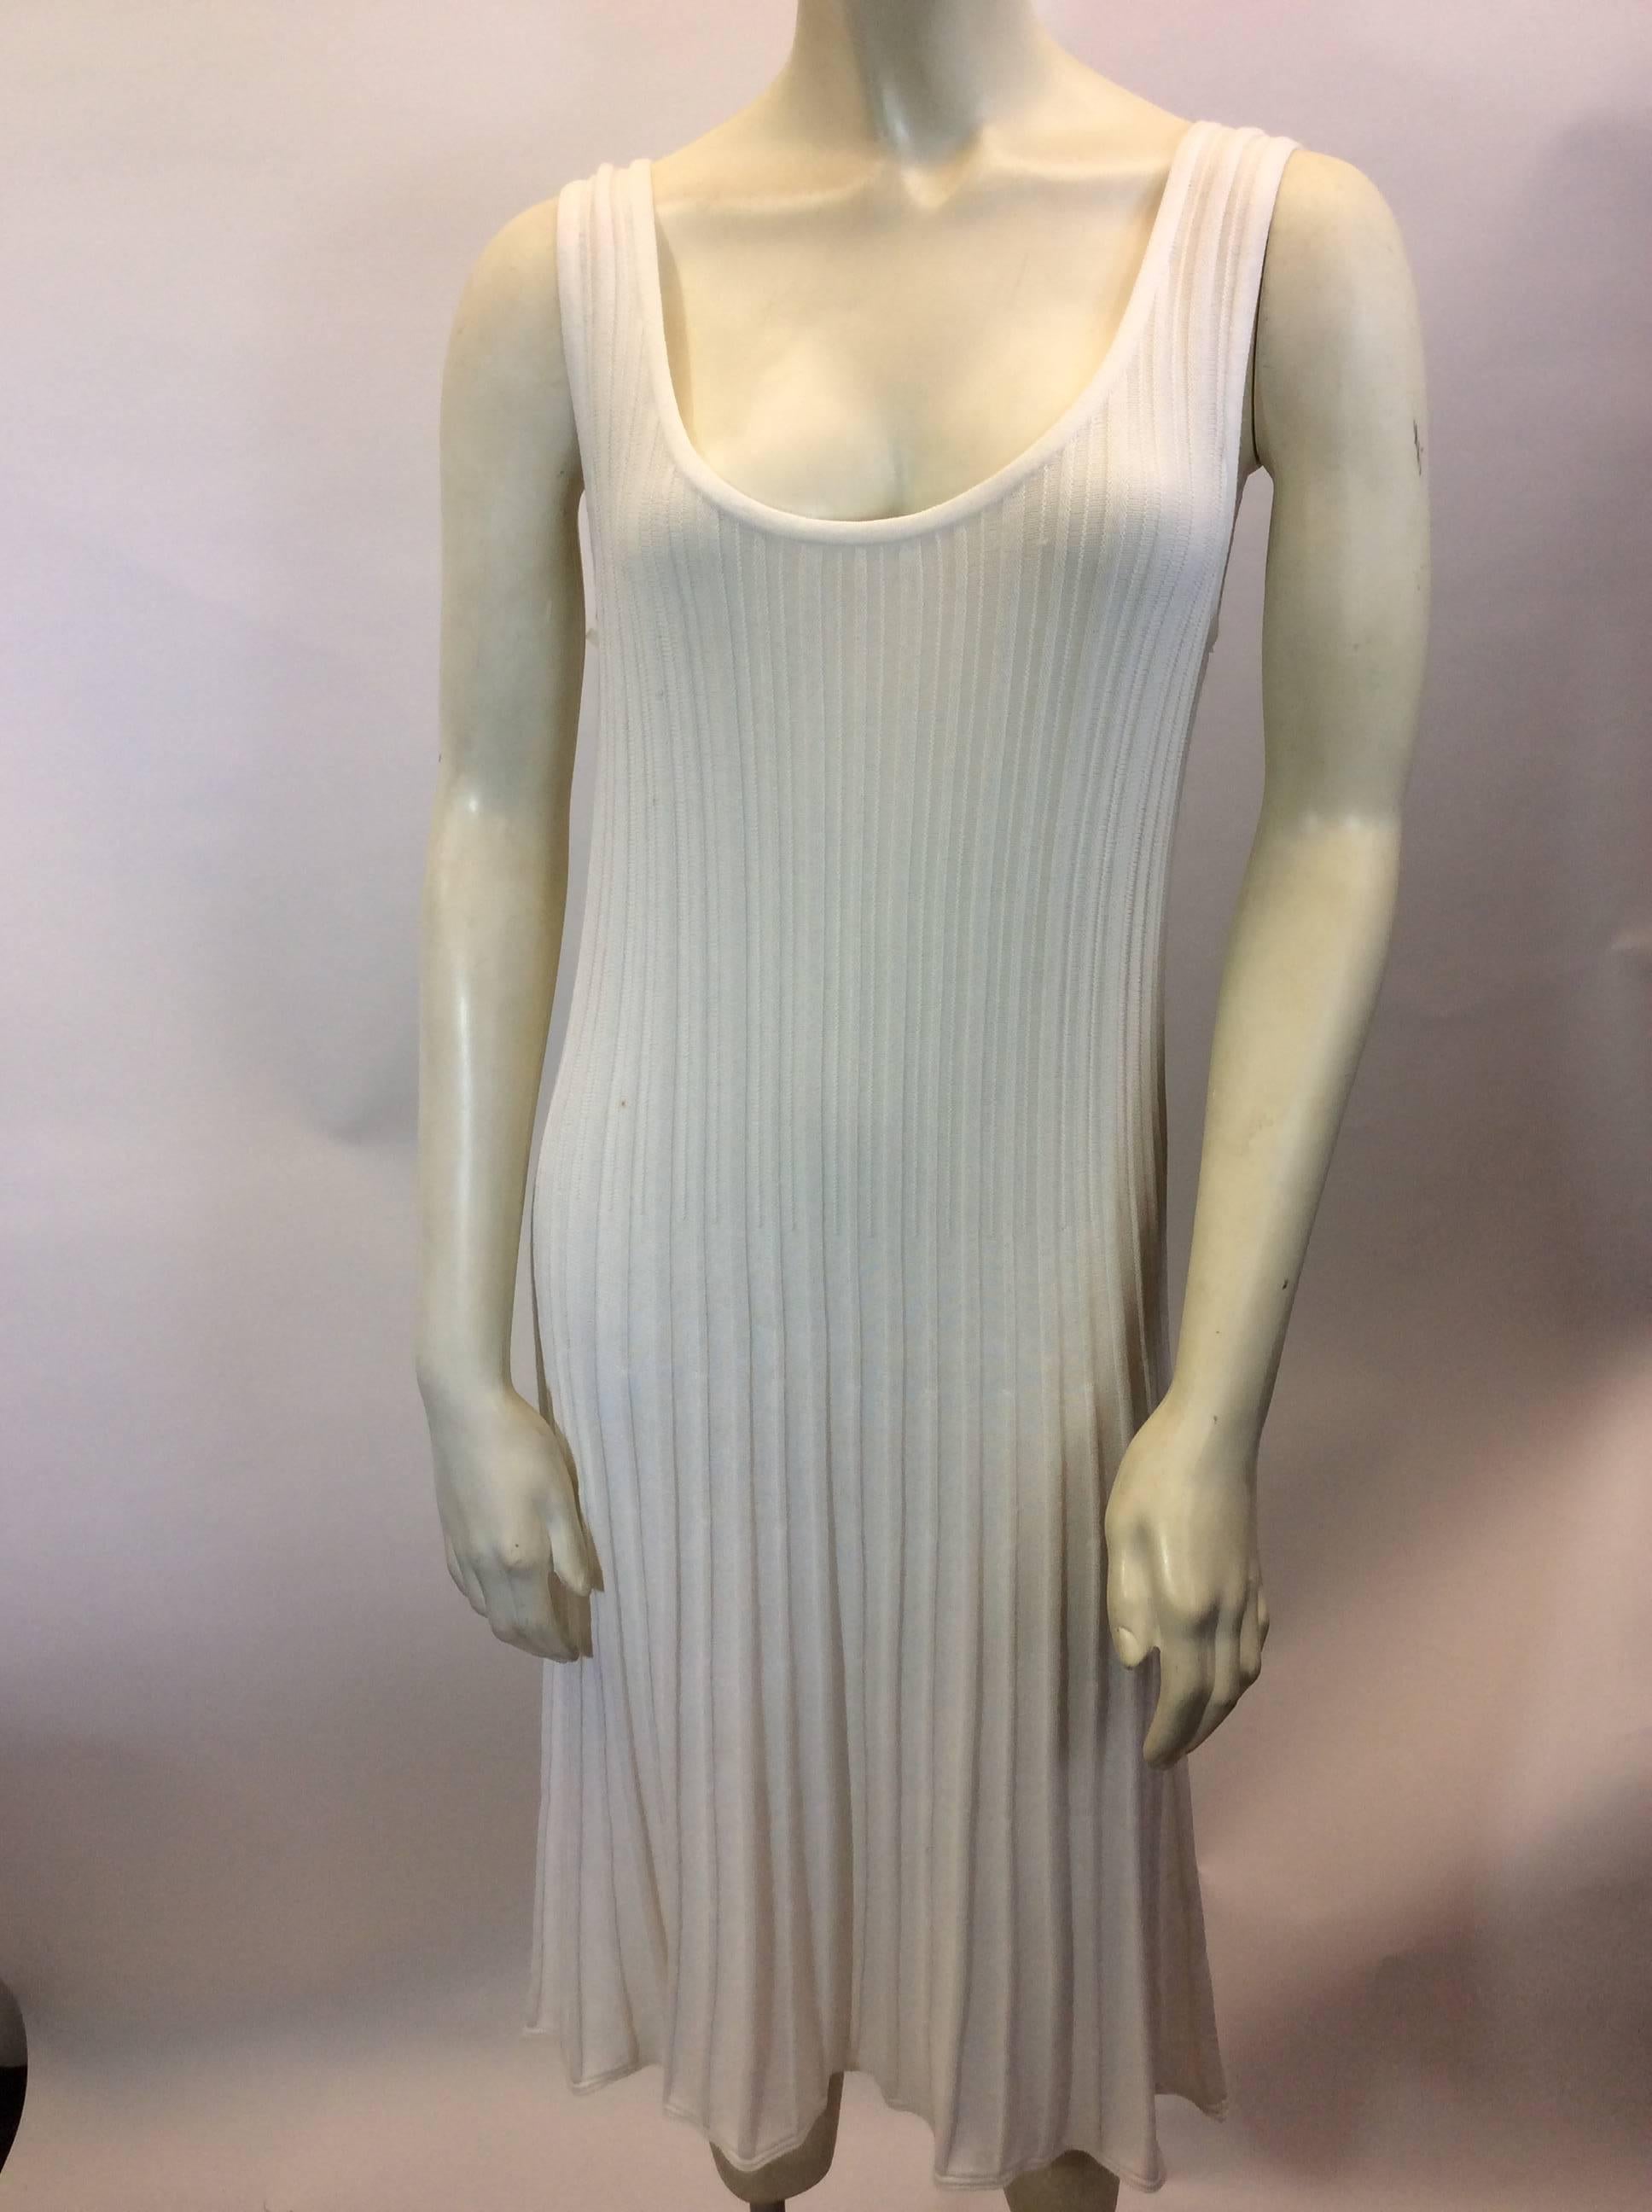 Damask White 2 Piece Dress And Cardigan
Size Small
Made in China
$199
55% Mako Cotton, 45% Viscose